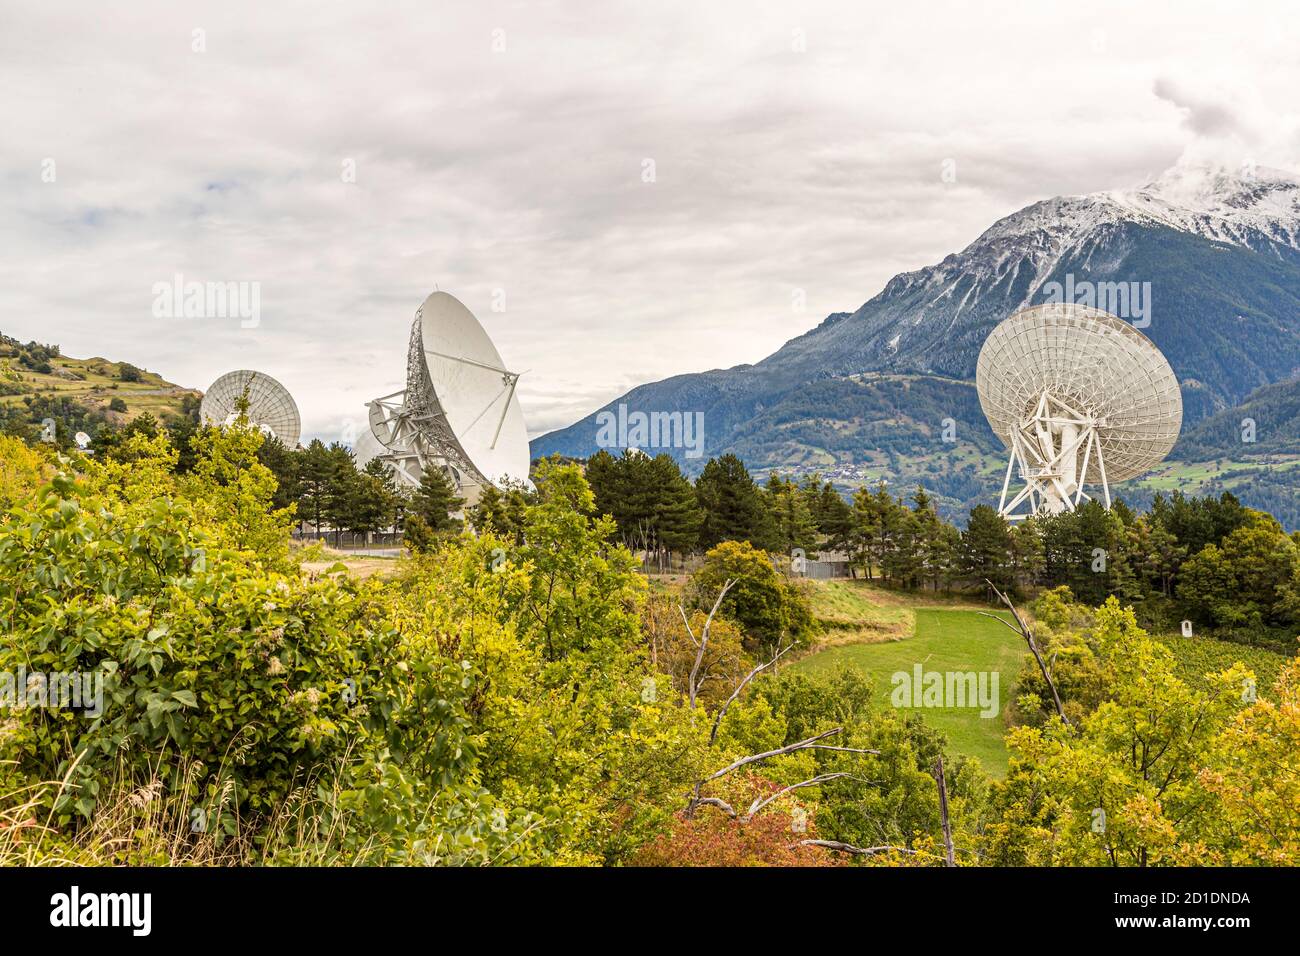 Signal horn ground station with parabolic antennas and satellite dishes in Bretjong near Leuk, Switzerland Stock Photo